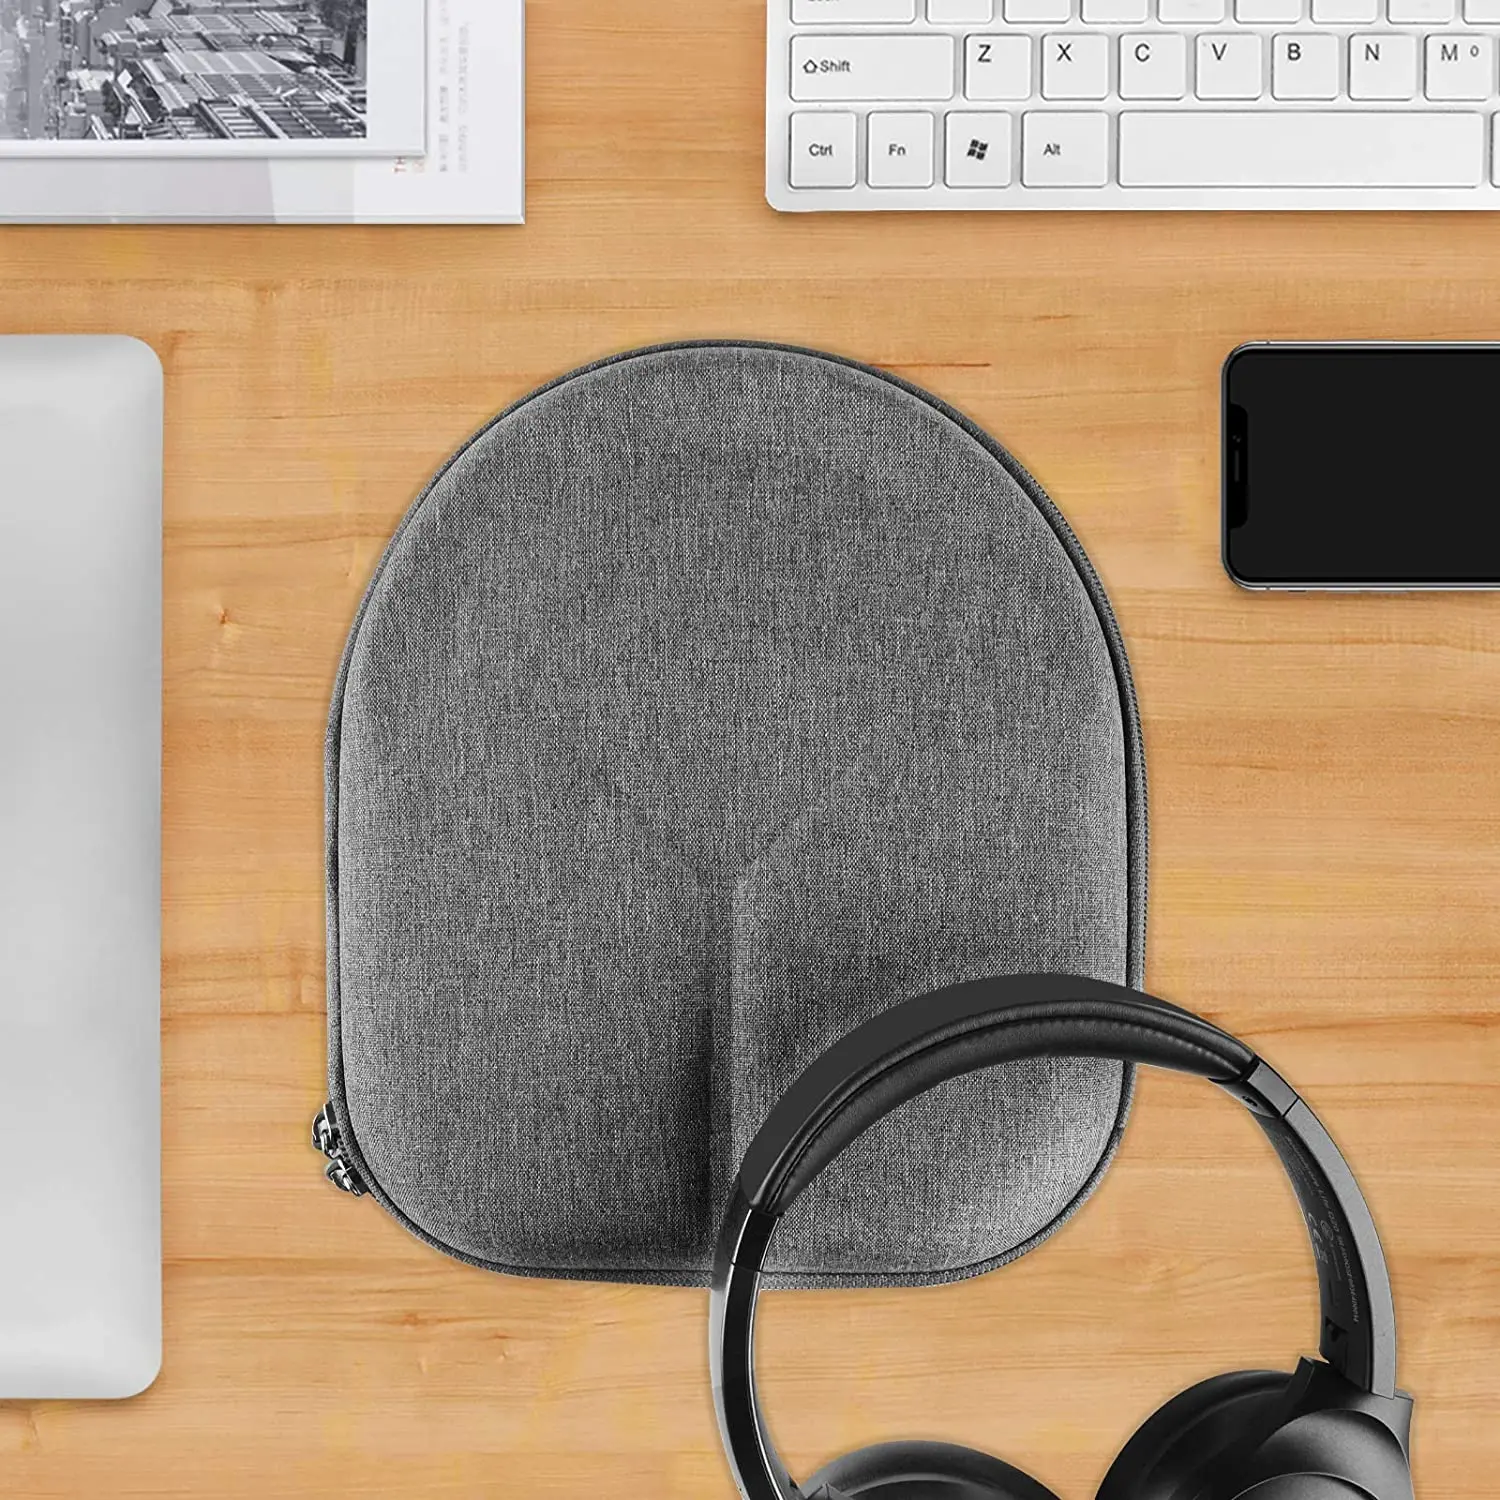 Geekria Headphones Case For Anker Soundcore Life Q35 Life Q20 Life Q30,Hard Portable Bluetooth Earphones Headset Bag For Storage enlarge